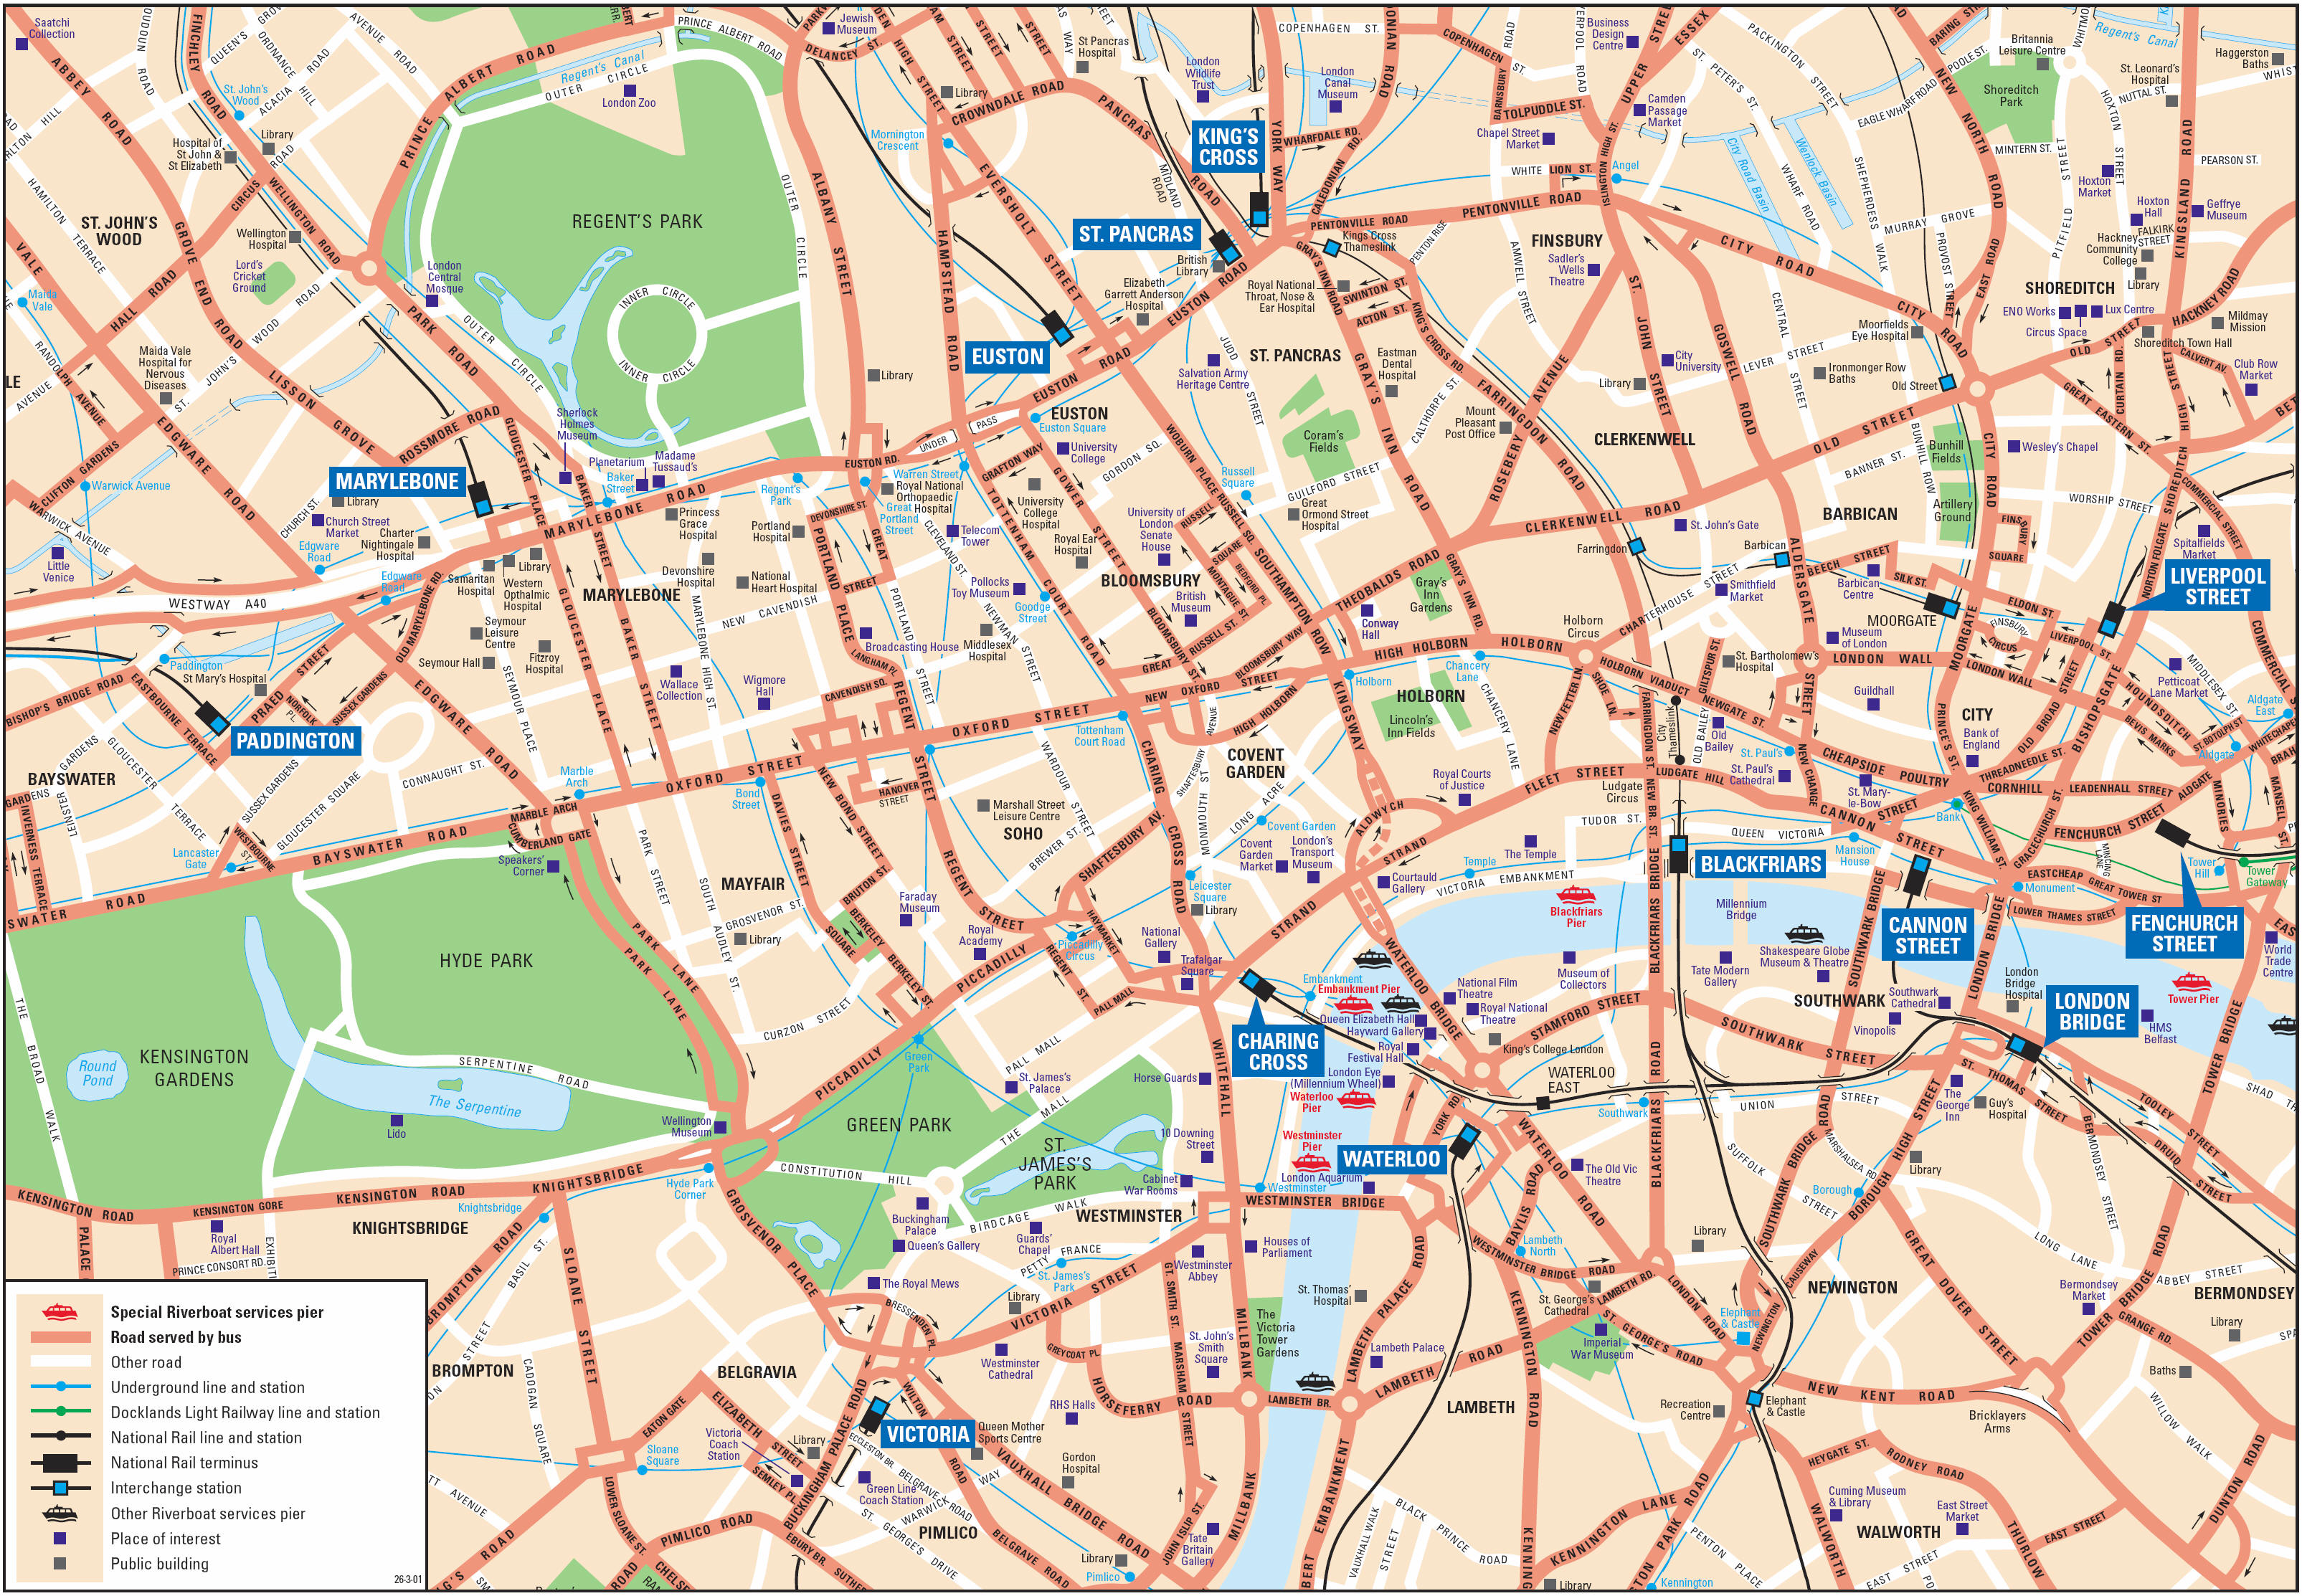 london-attractions-map-pdf-free-printable-tourist-map-london-waking-tours-maps-2020